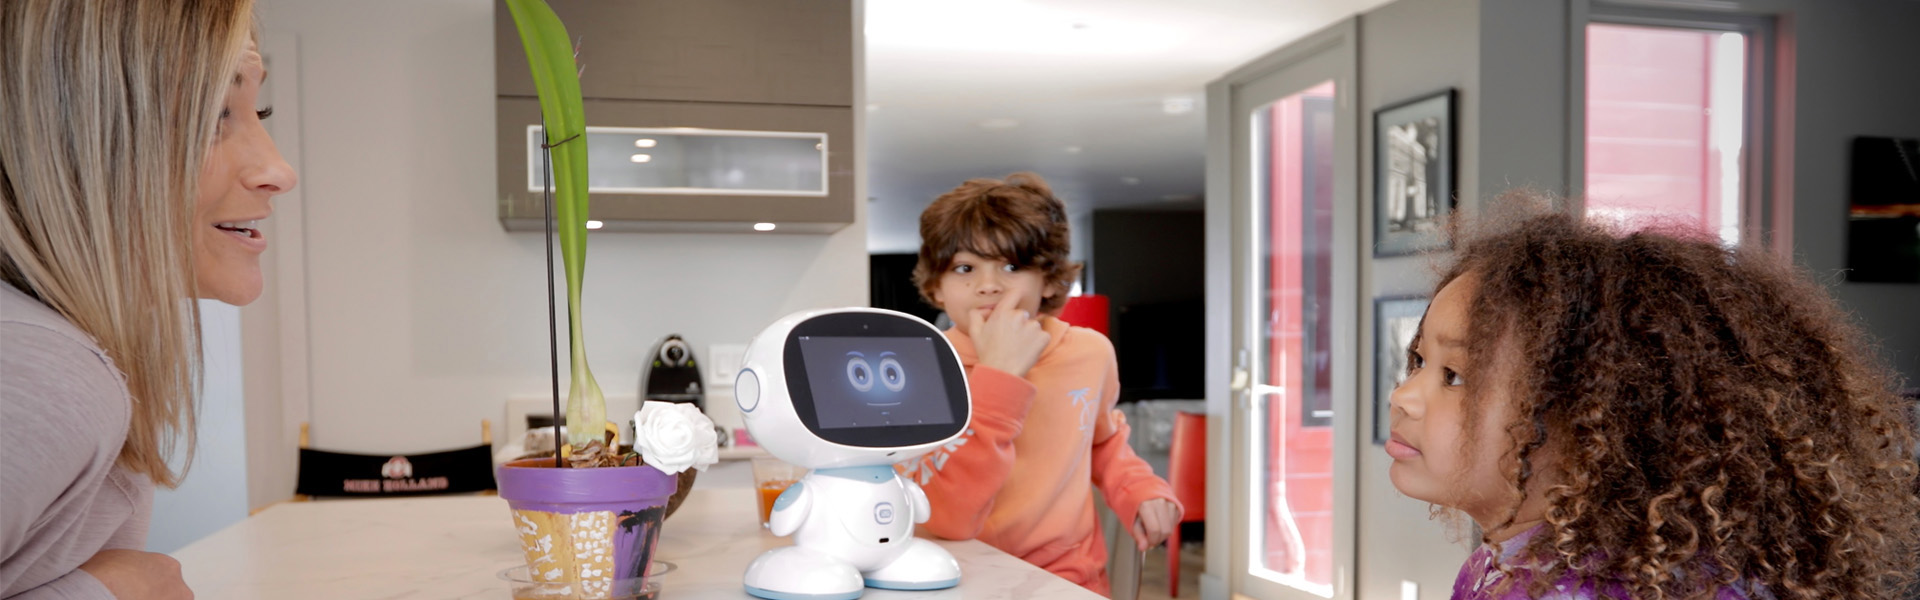 Meet the Misa family robot 